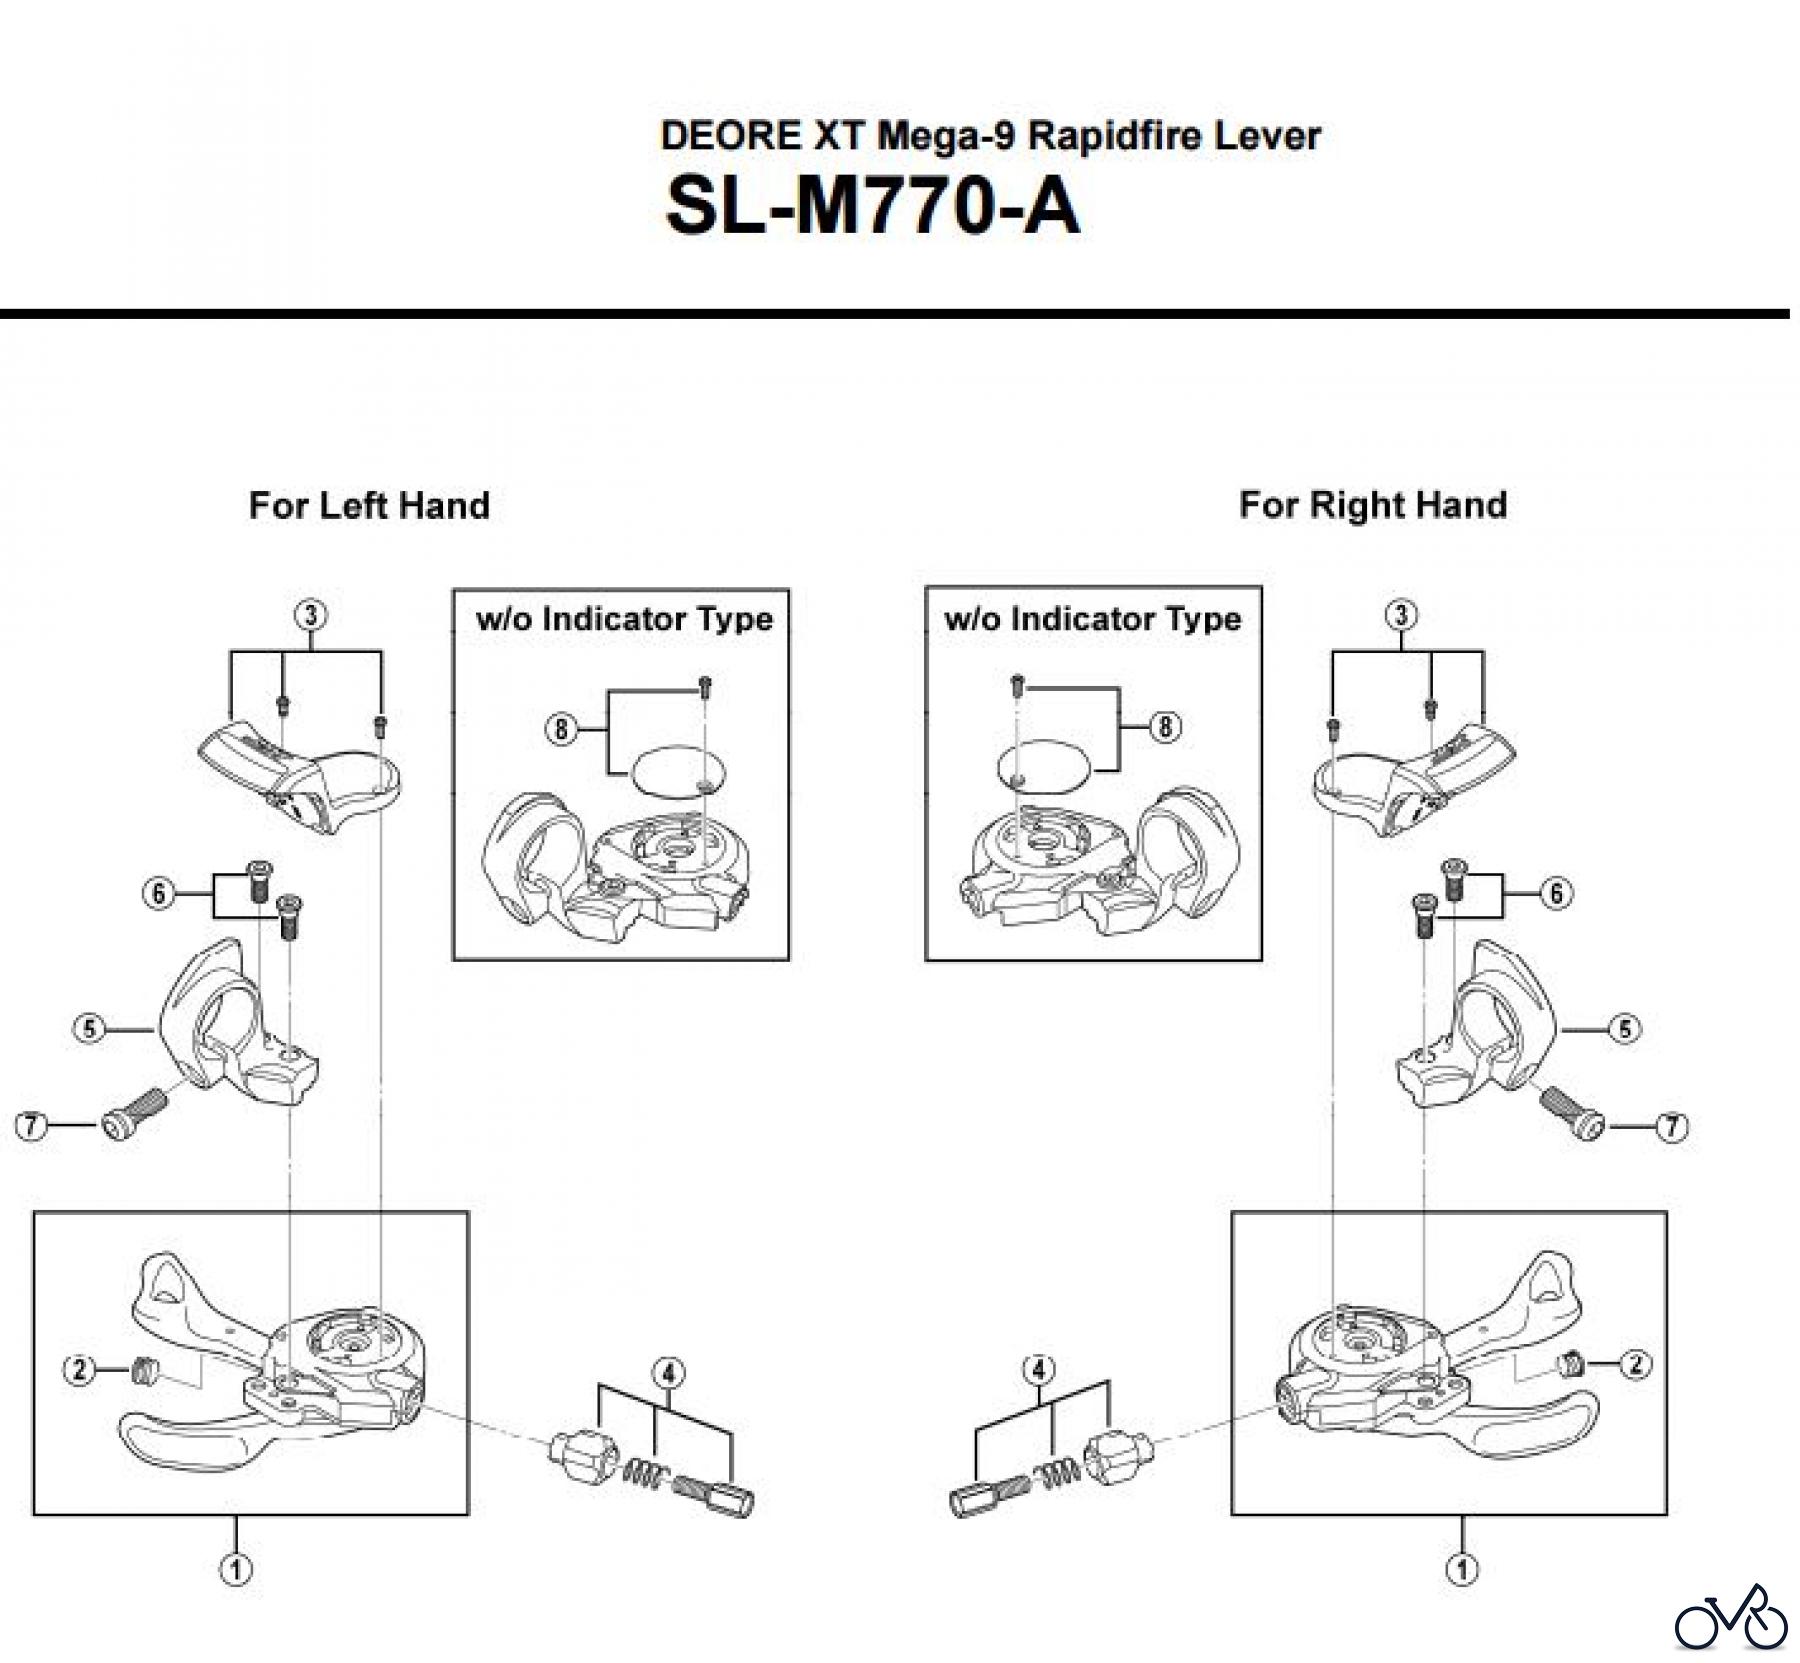  Shimano SL Shift Lever - Schalthebel SL-M770-A-3182 DEORE XT Mega-9 Rapidfire Lever